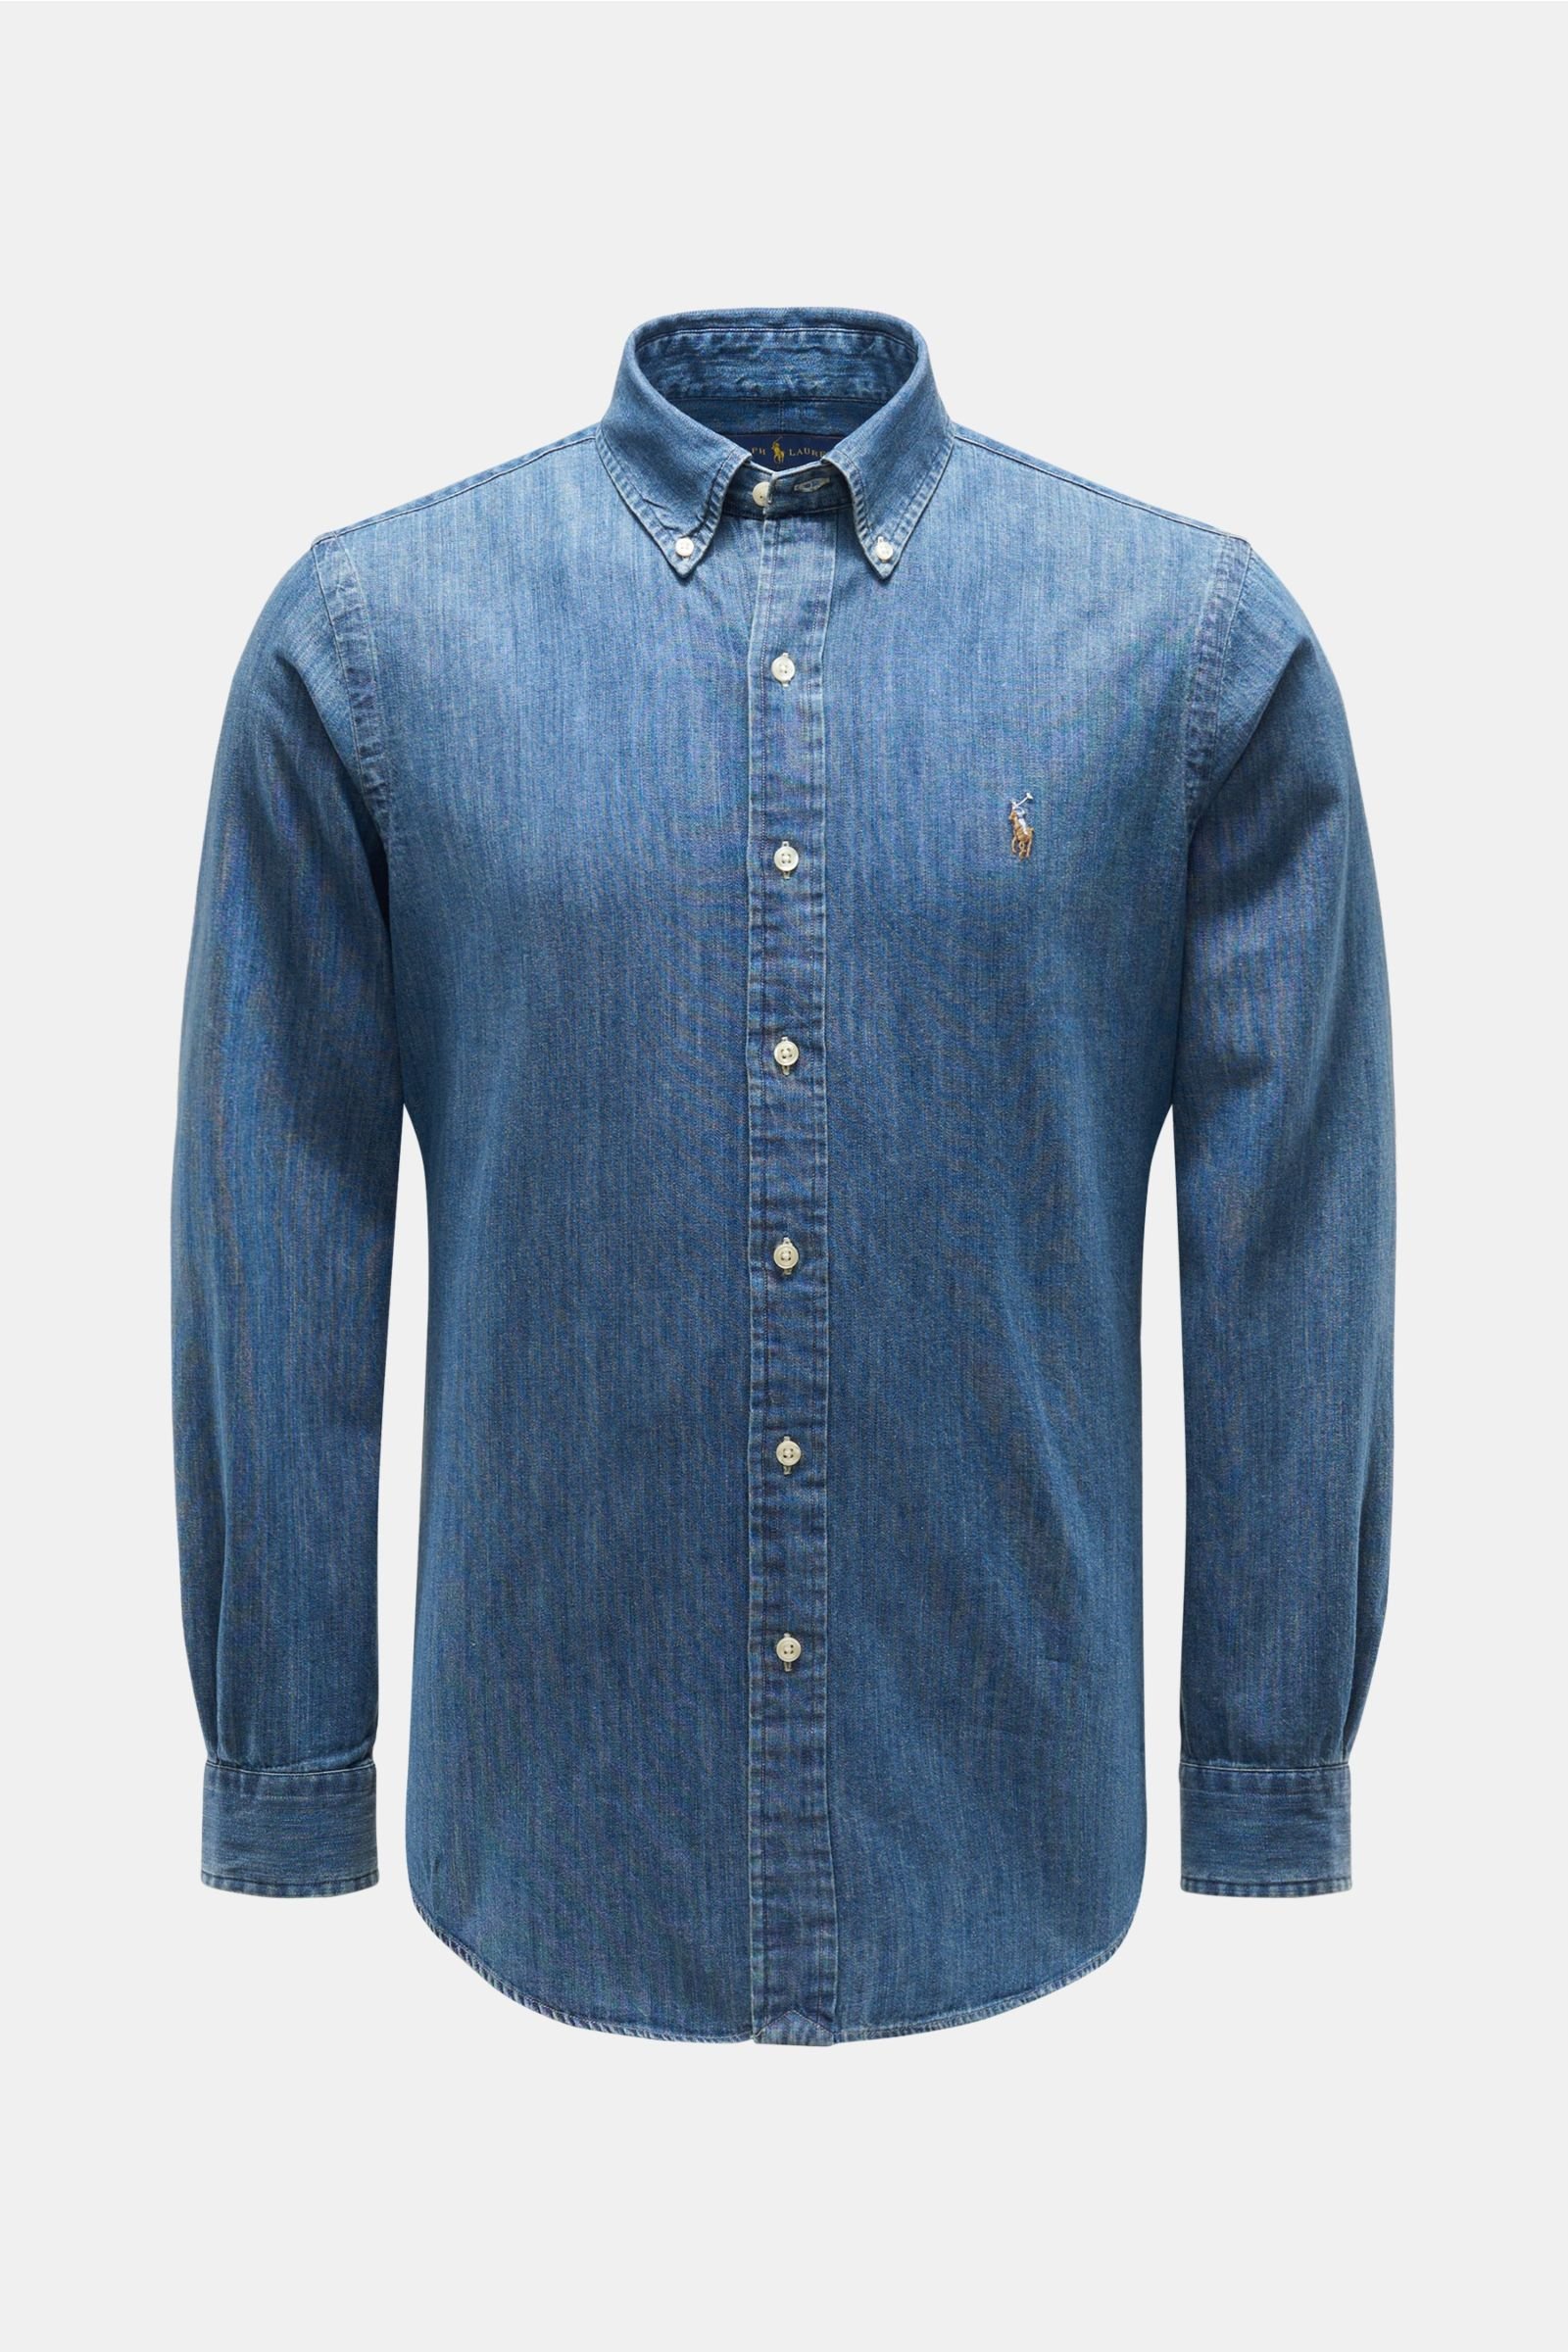 Chambray shirt button-down collar grey-blue